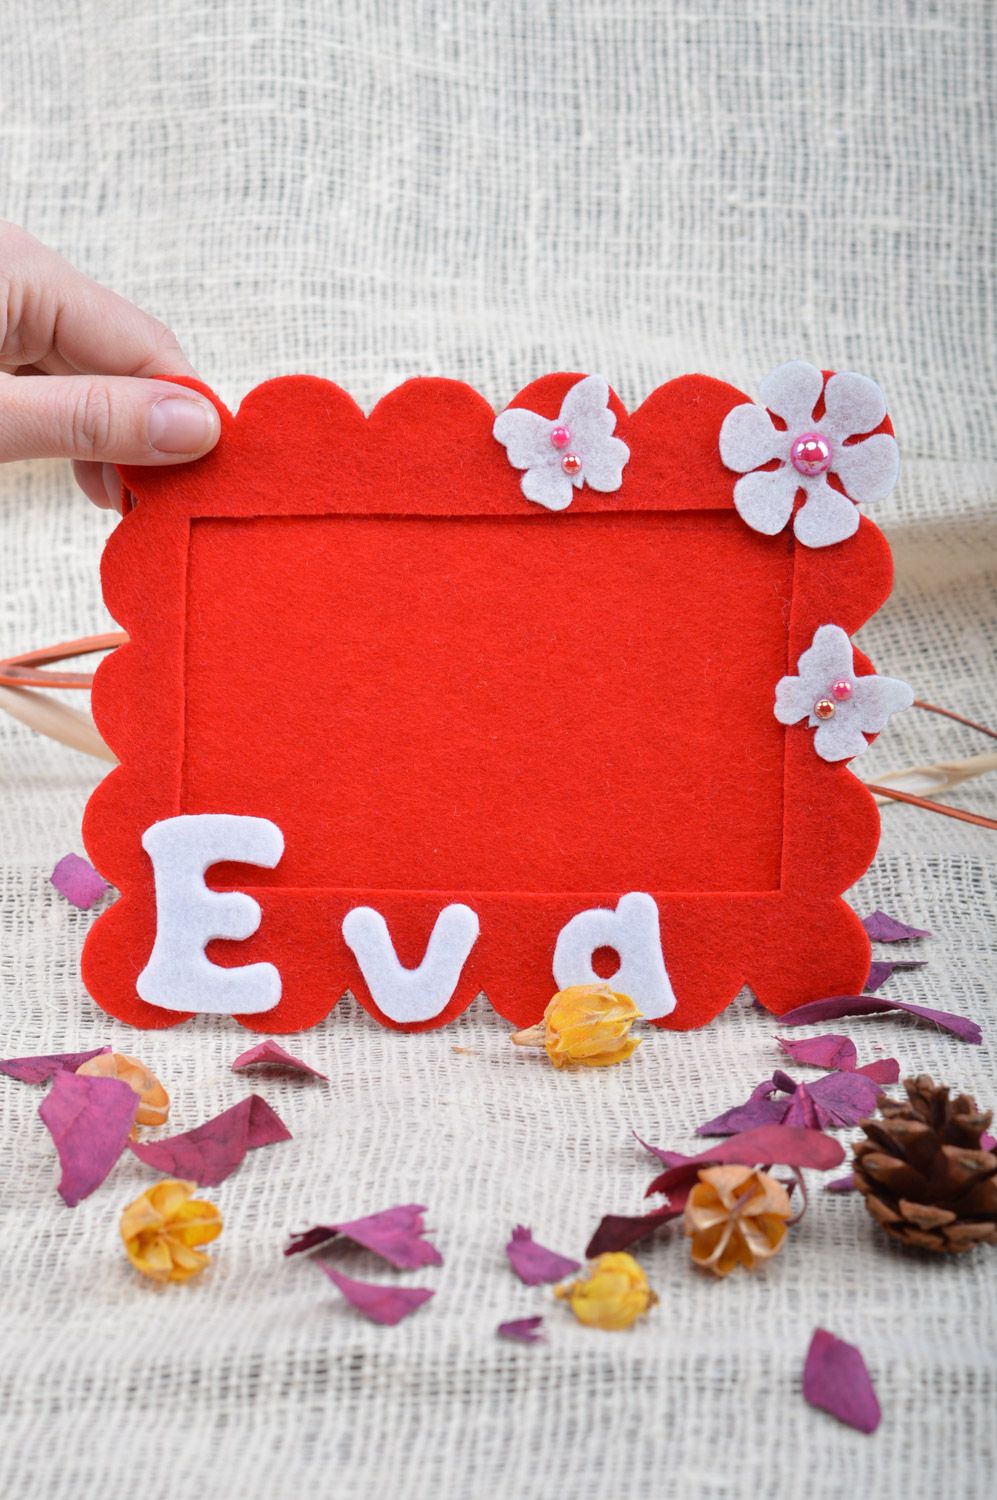 Handmade red felt wall photo frame with baby's name Eva photo 4